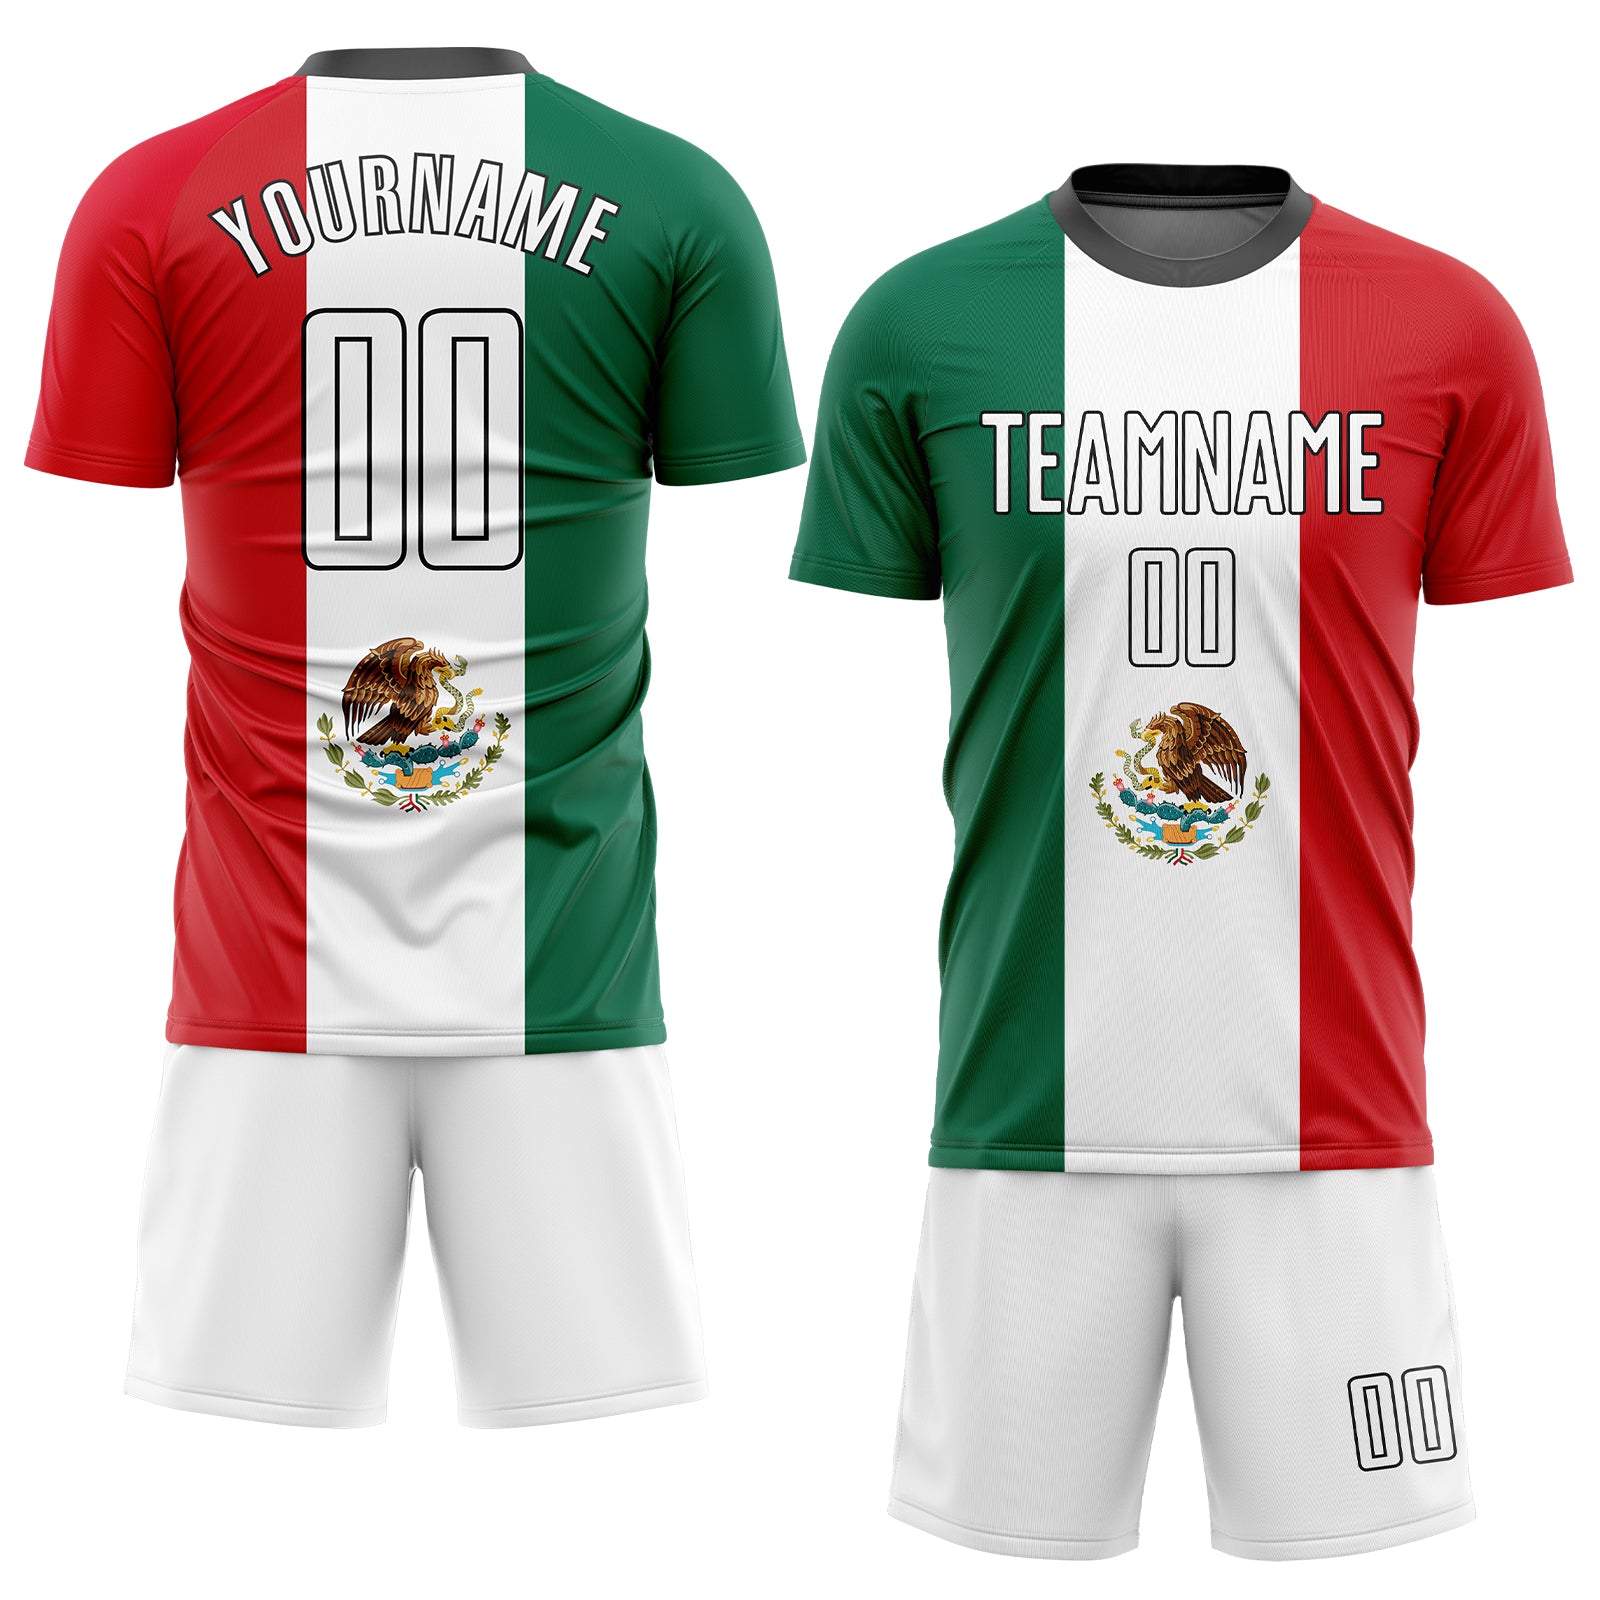 FANSIDEA Custom Kelly Green White Red-Black Sublimation Mexican Flag Soccer Uniform Jersey Men's Size:3XL